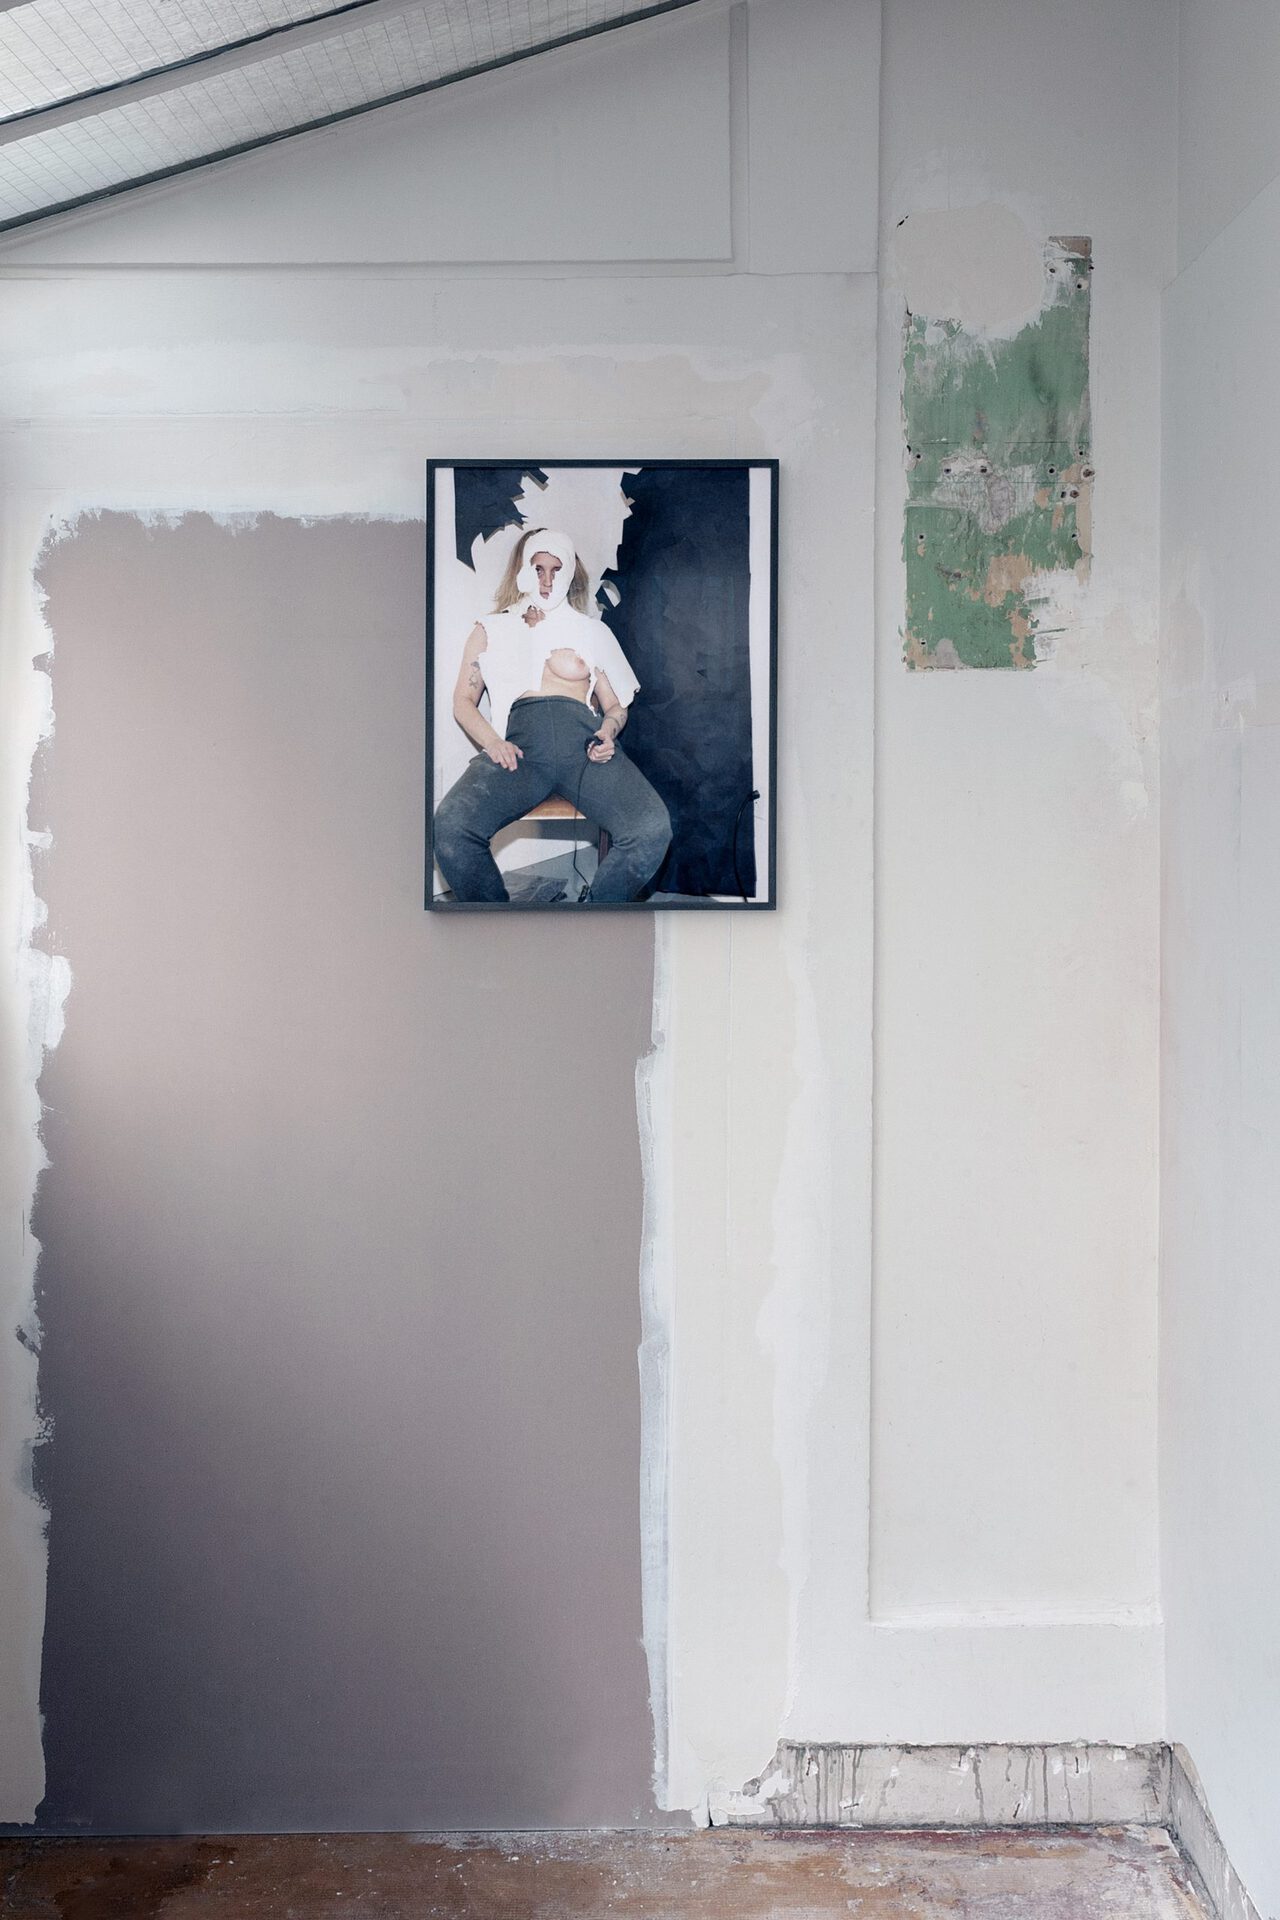 Whitney Hubbs, Pleasure Possibilities #3, 2019, archival pigment print